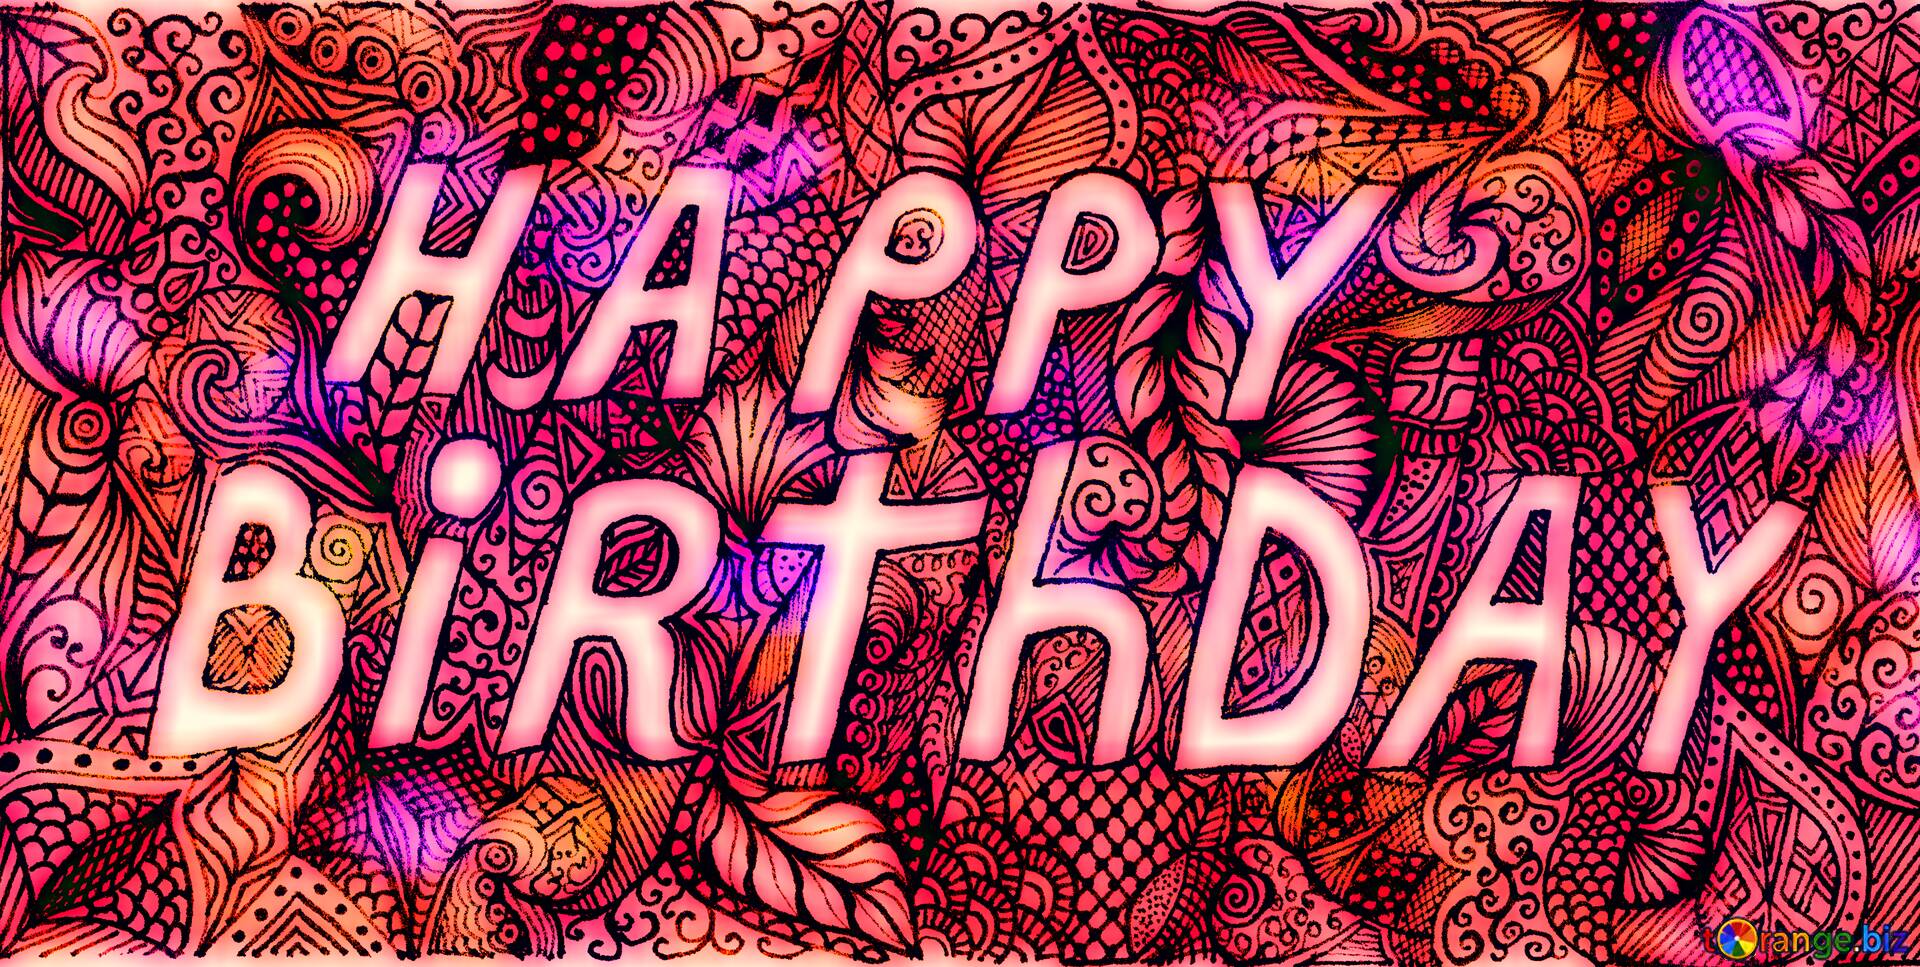 Download Free Picture Glow Happy Birthday Background On Cc By License Free Image Stock Torange Biz Fx